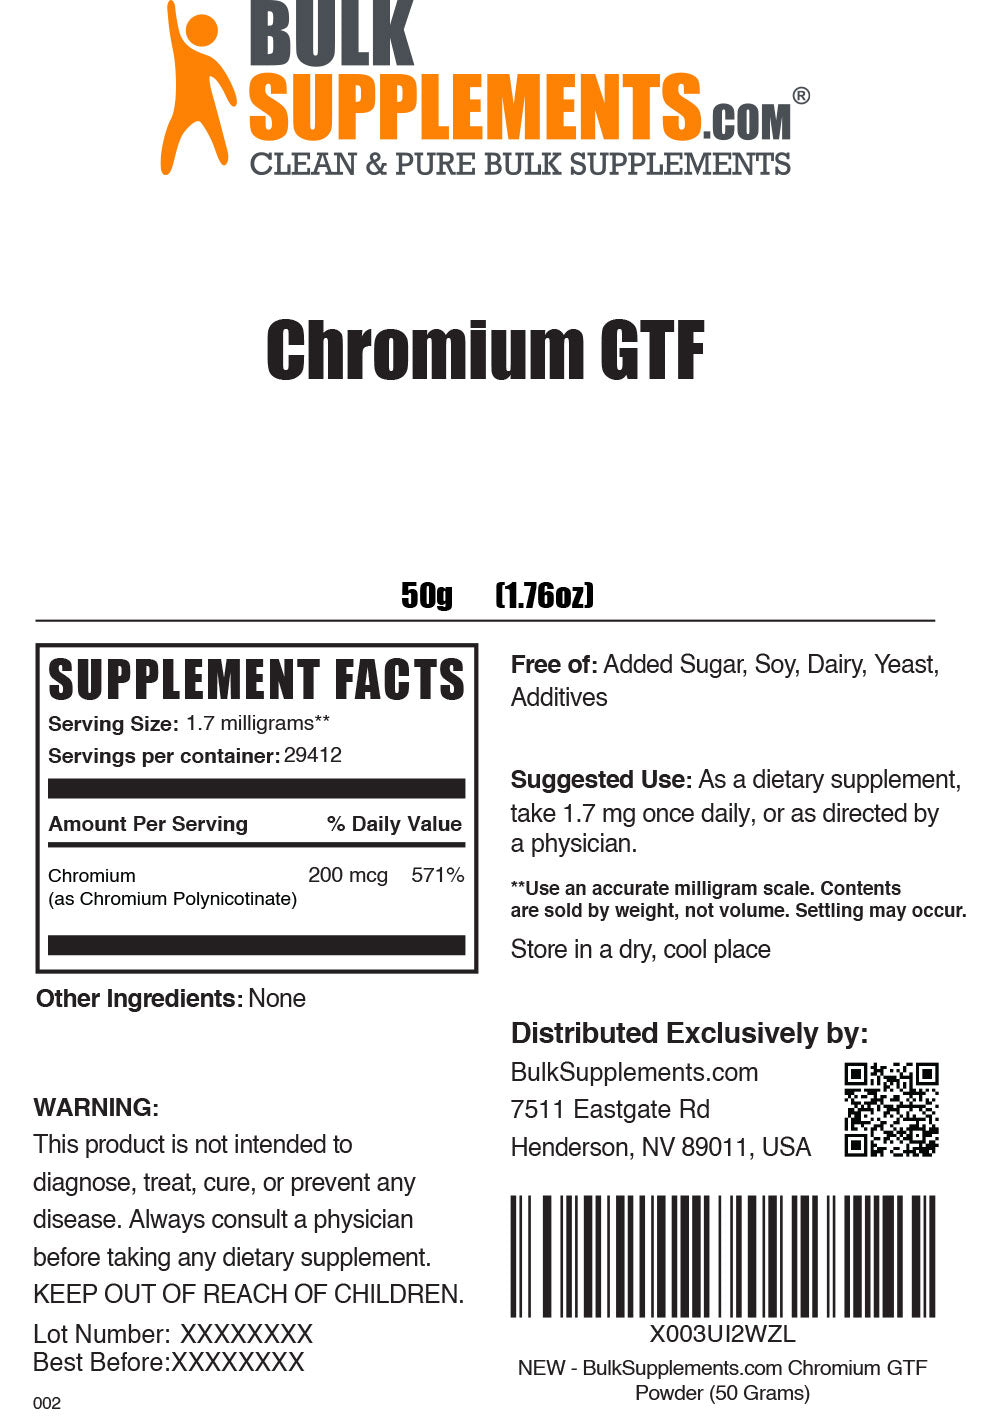 50g chromium GTF supplement facts label